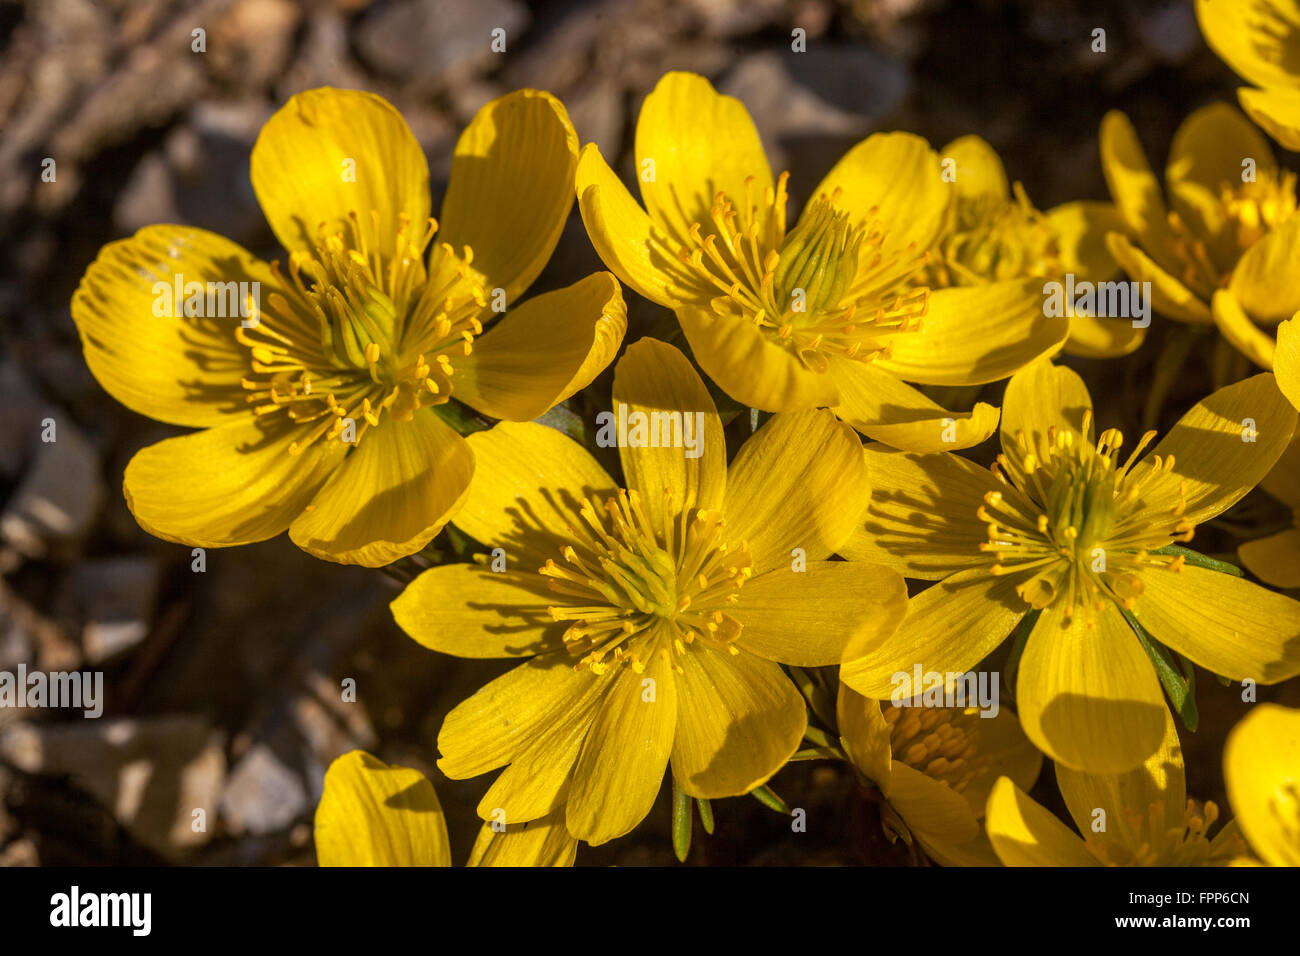 Eranthis hyemalis Cilicica, winter aconite blooming flowers Stock Photo